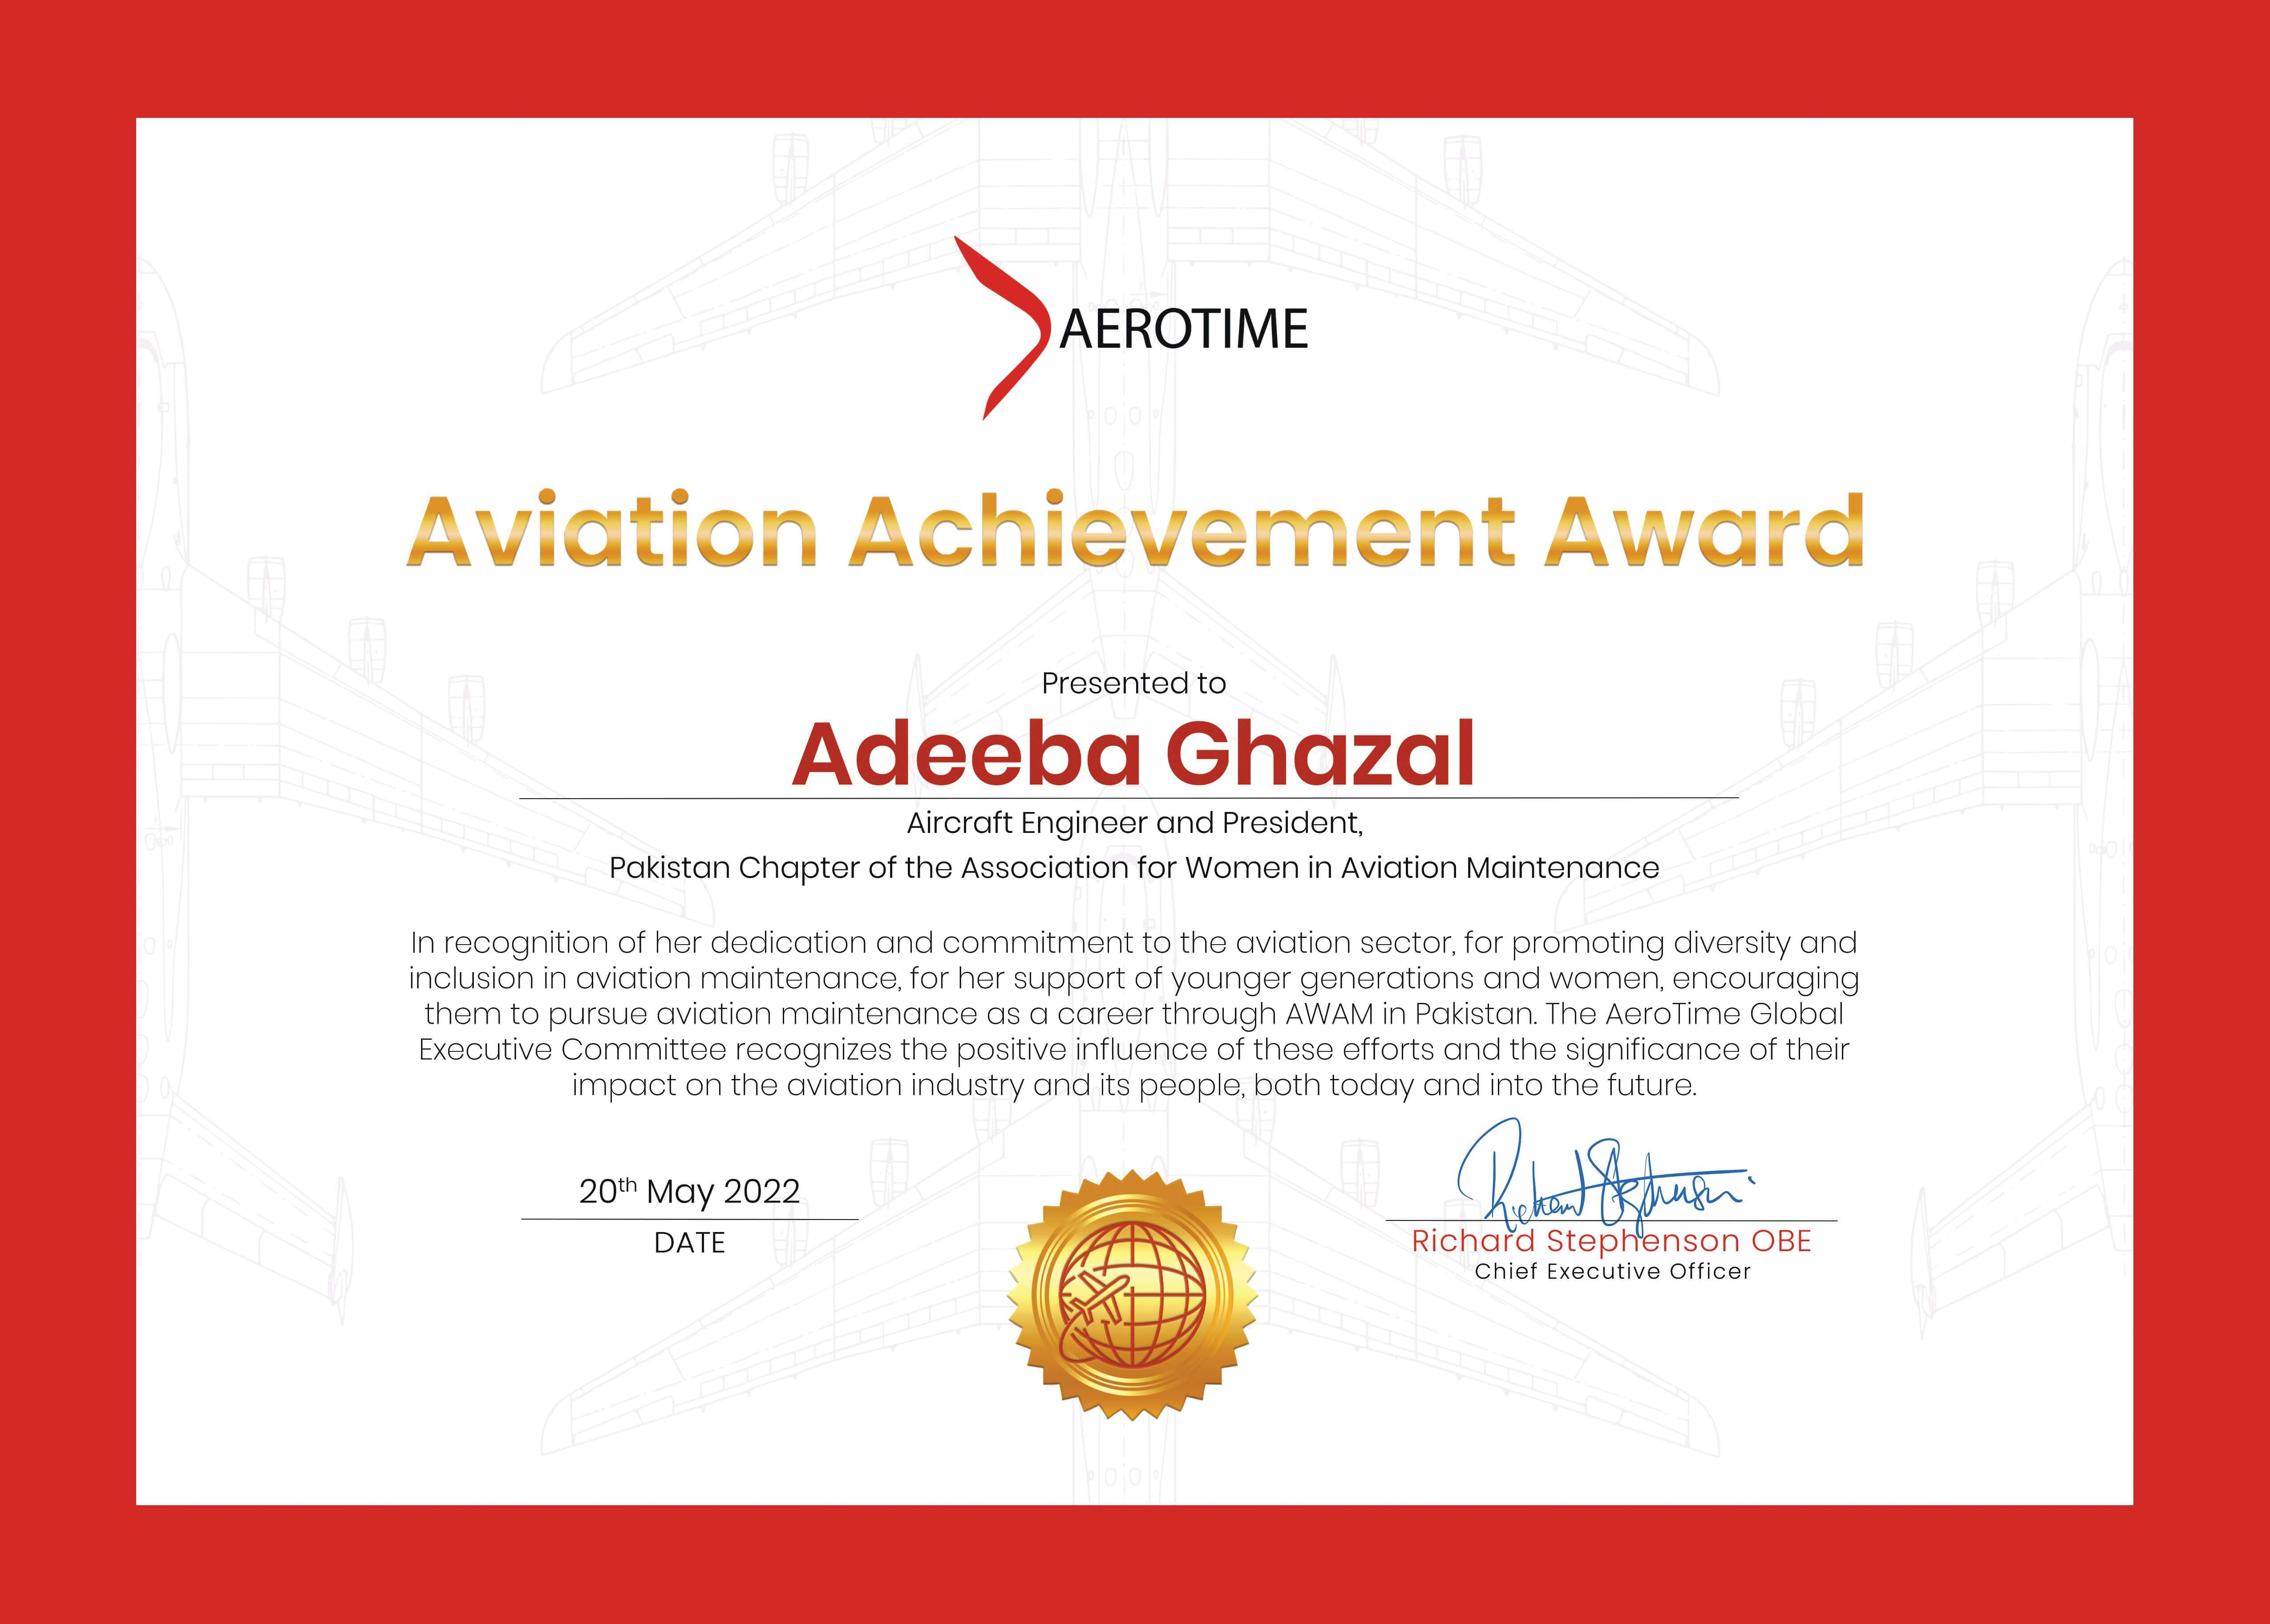 AeroTime Aviation Achievement Award for Adeeba Ghazal